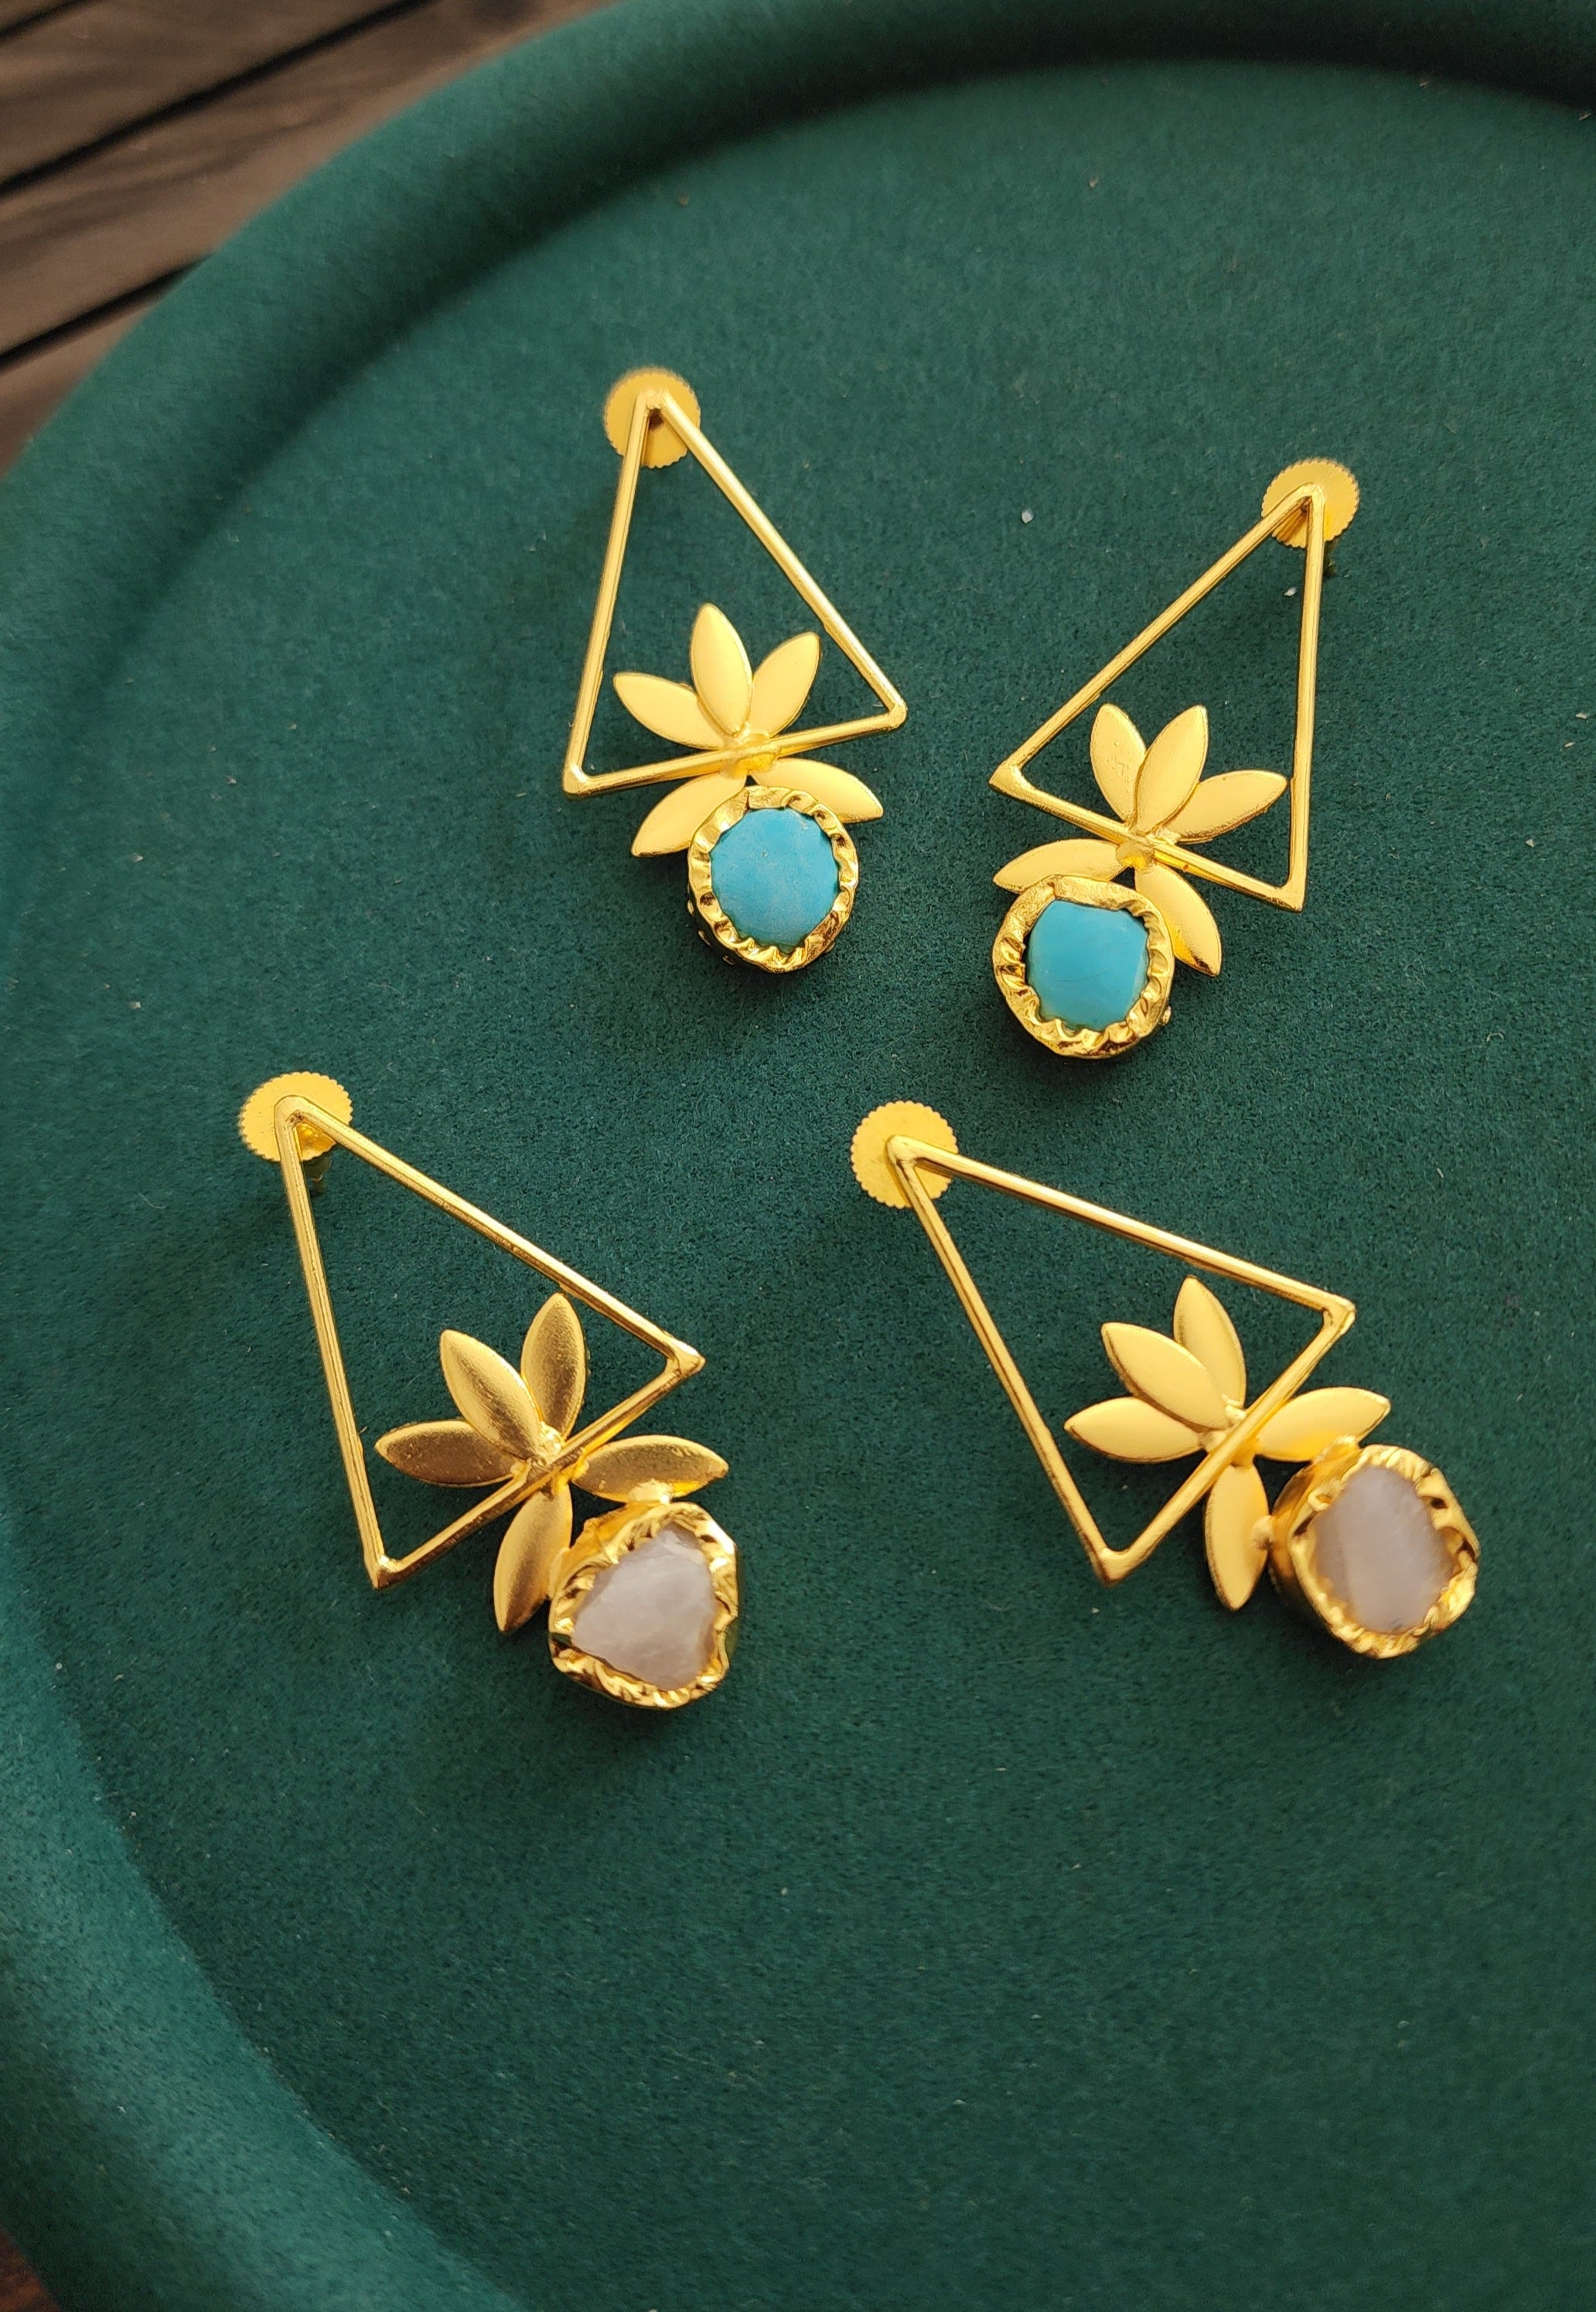 Poppy Contemporary earrings